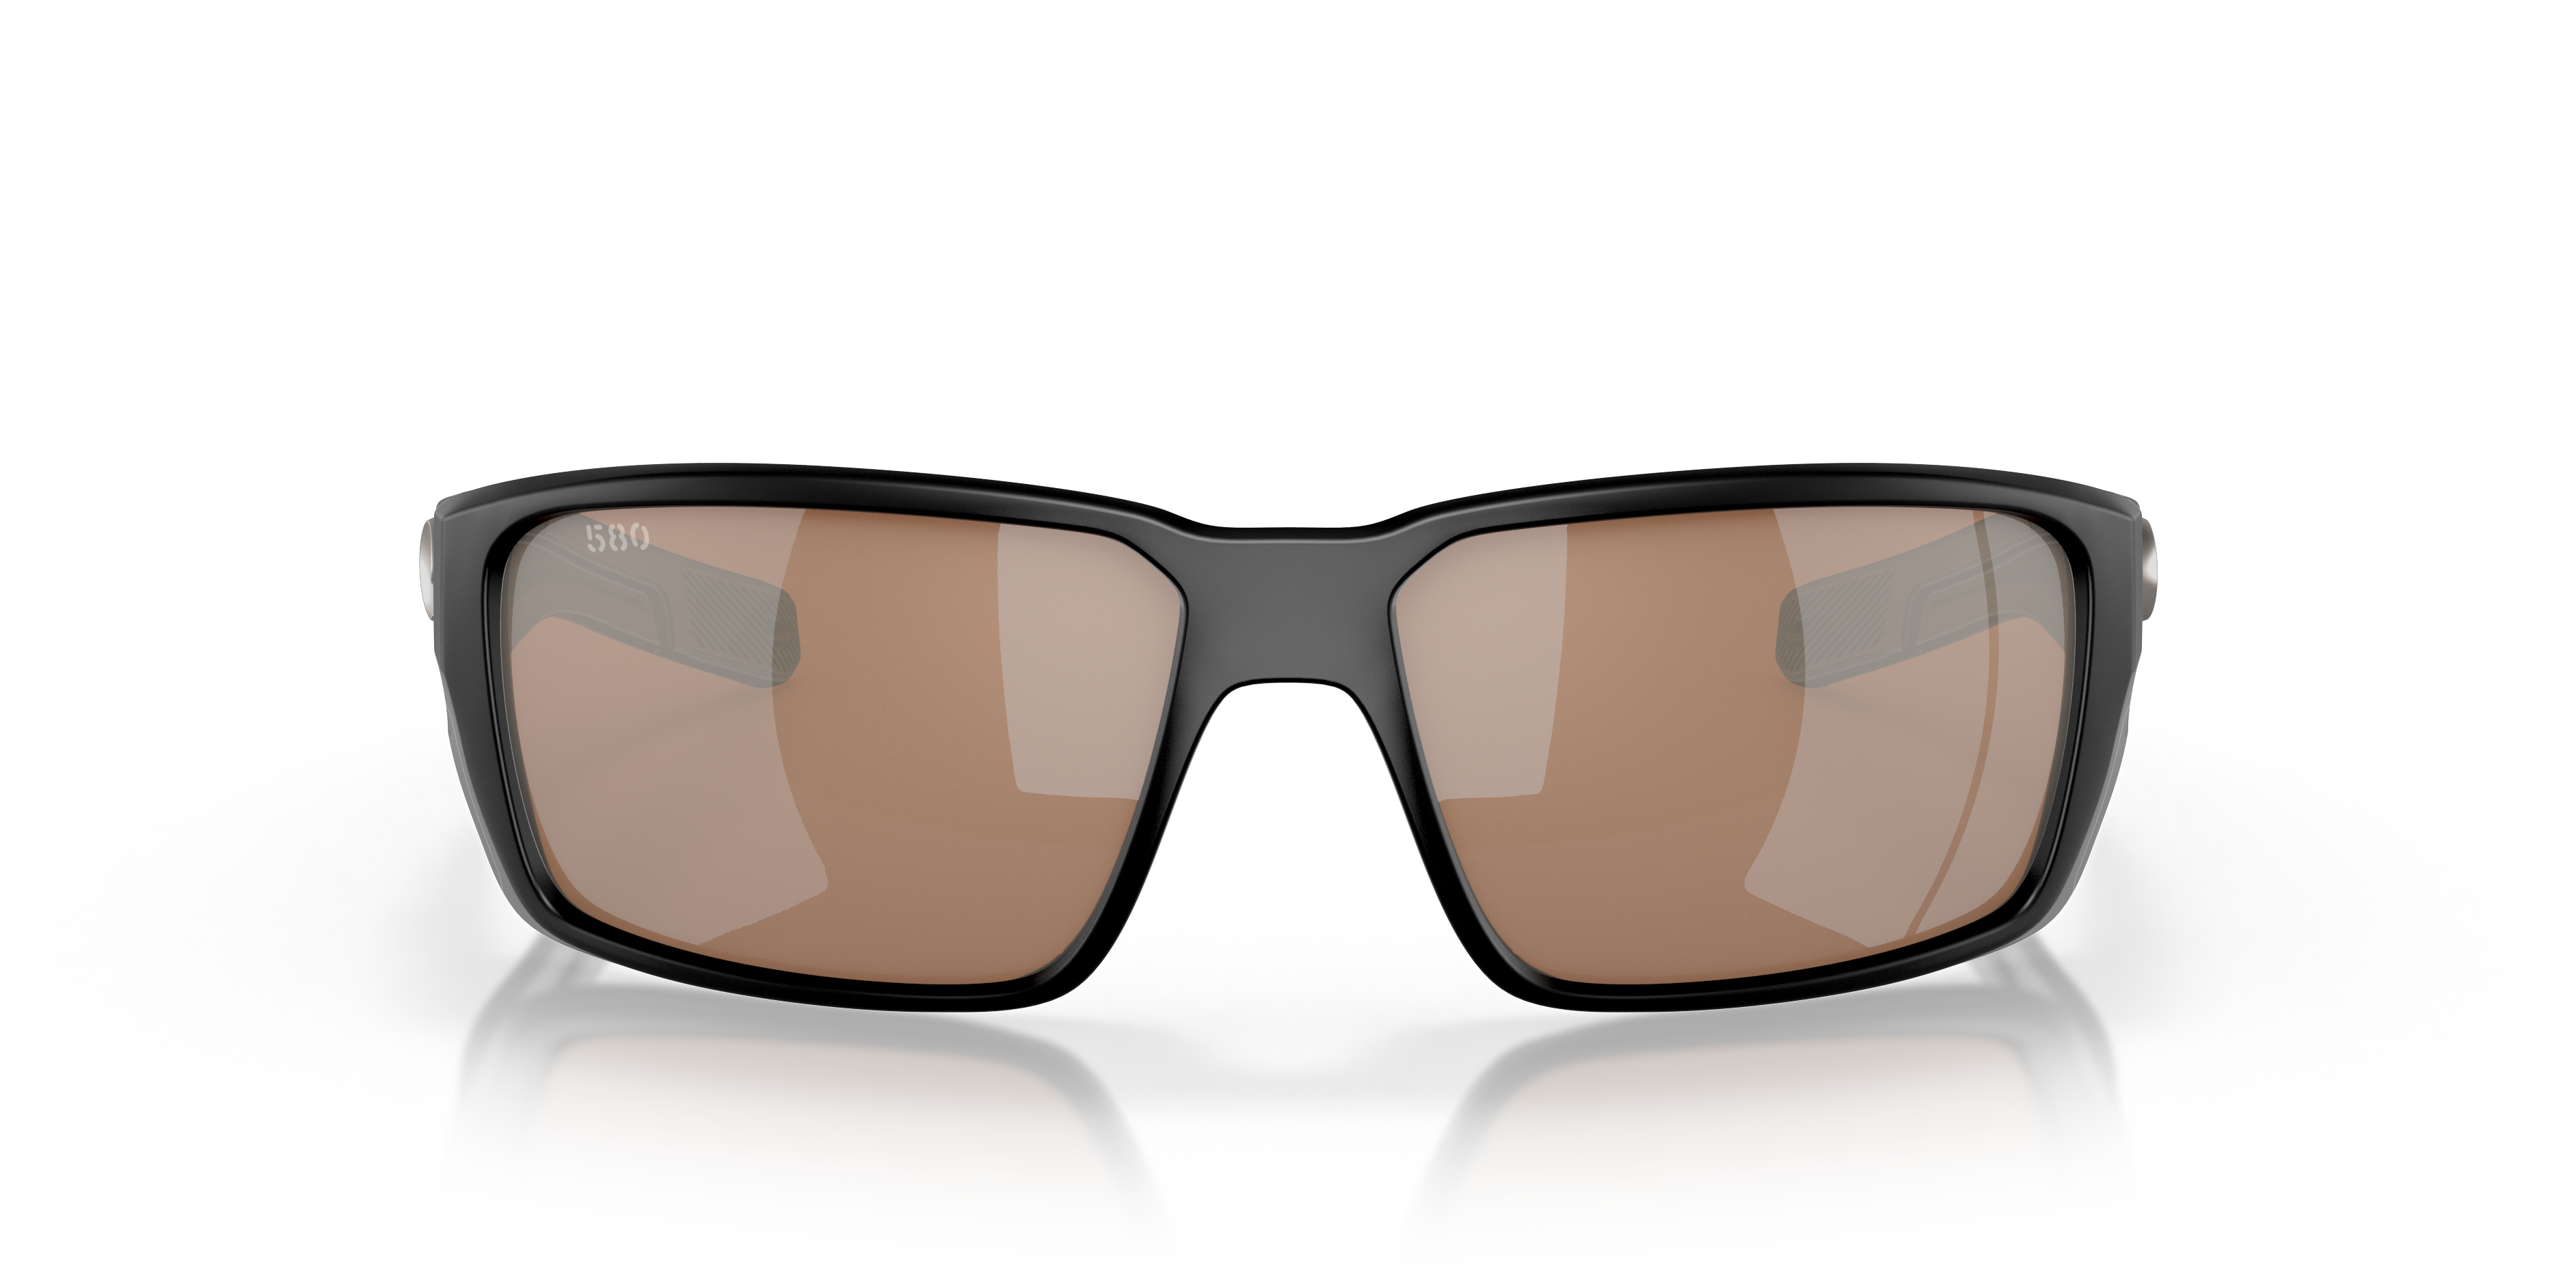 100 Pairs Fashion Vision Care Silicone Eyeglass Sunglass Glasses Nose Pads Healt